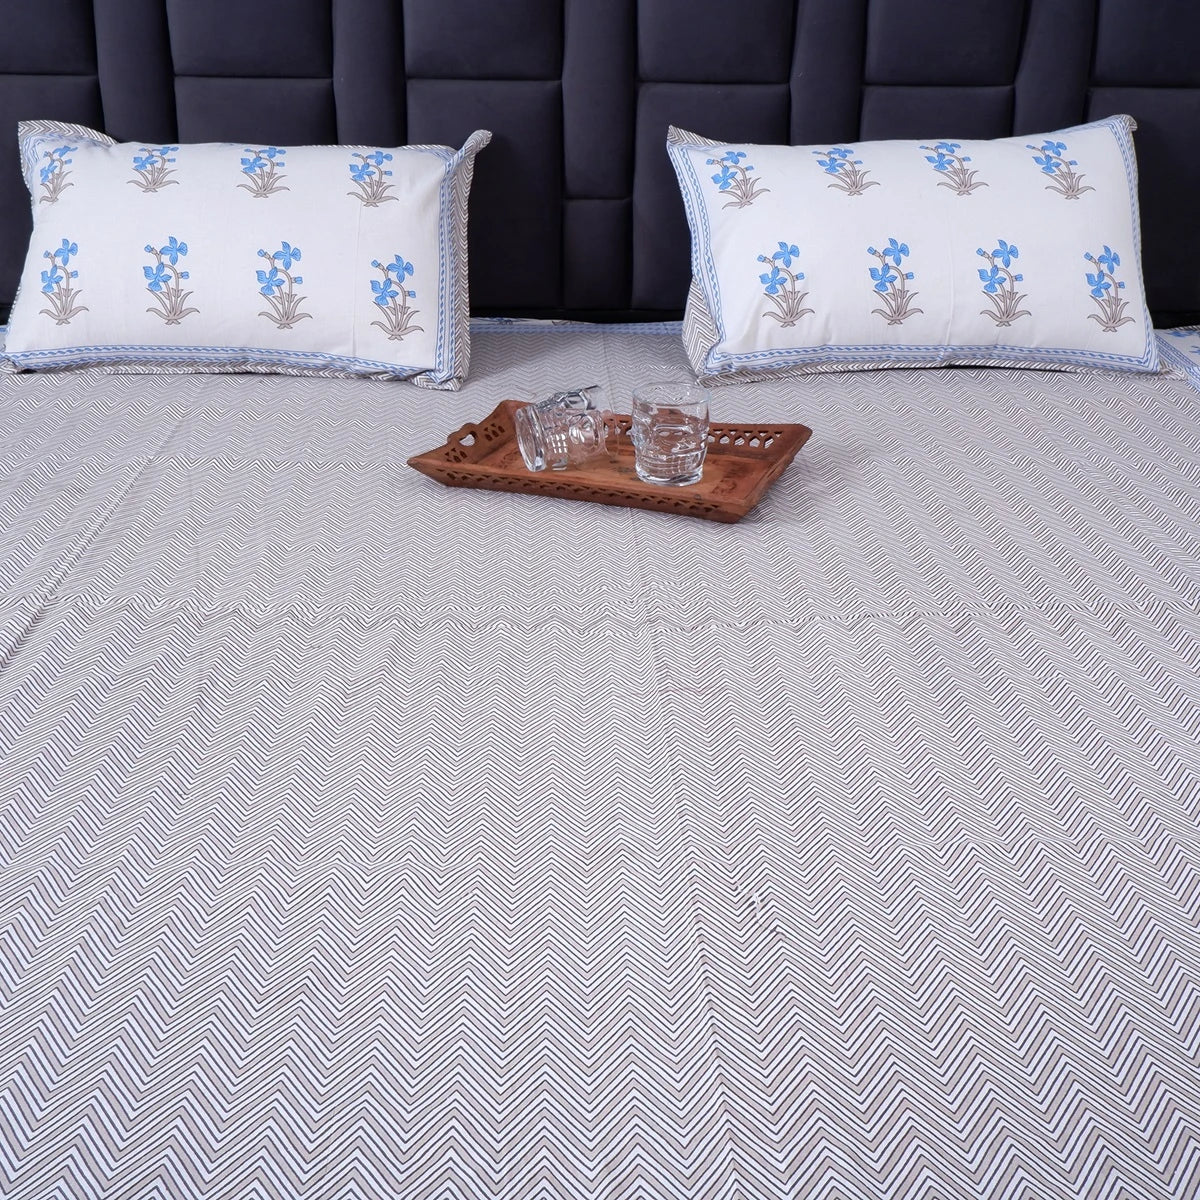 100% Pure Cotton Bed Sheet | Classic Print Design